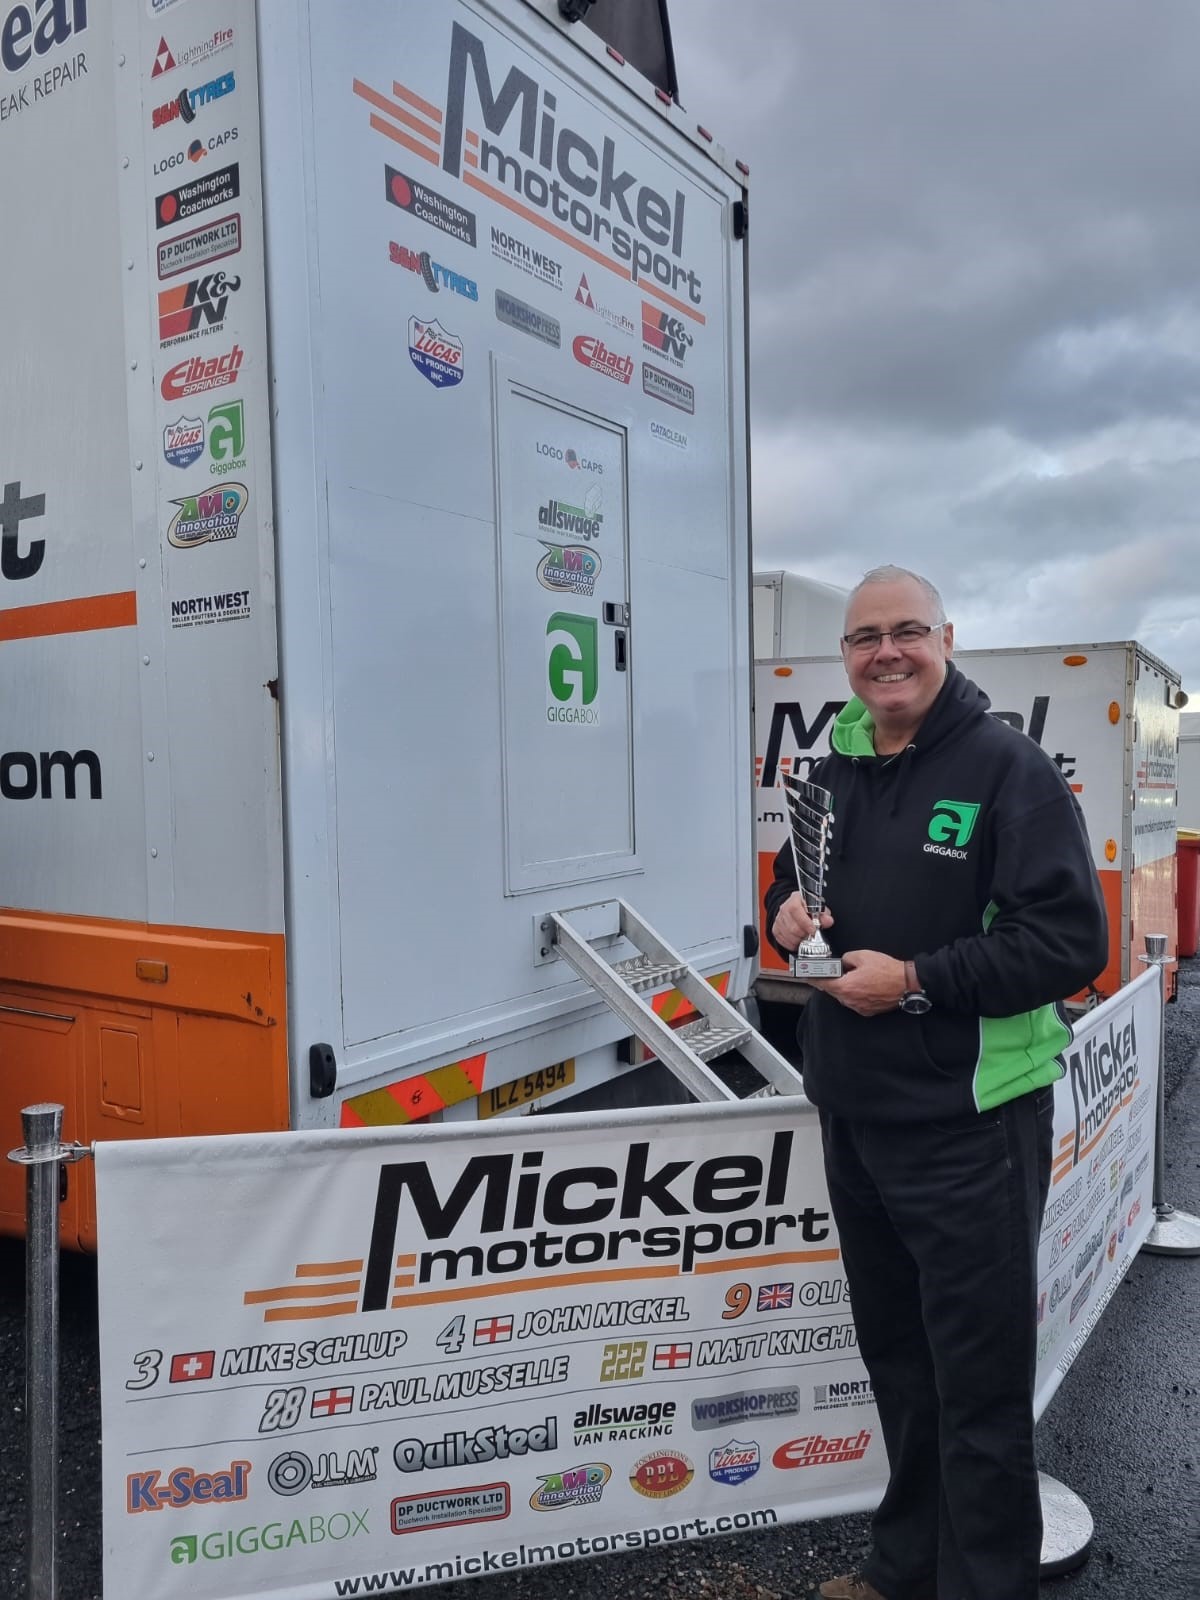 Podiums a plenty for Mickel Motorsport at Knockhill, Scotland Gallery Image 3